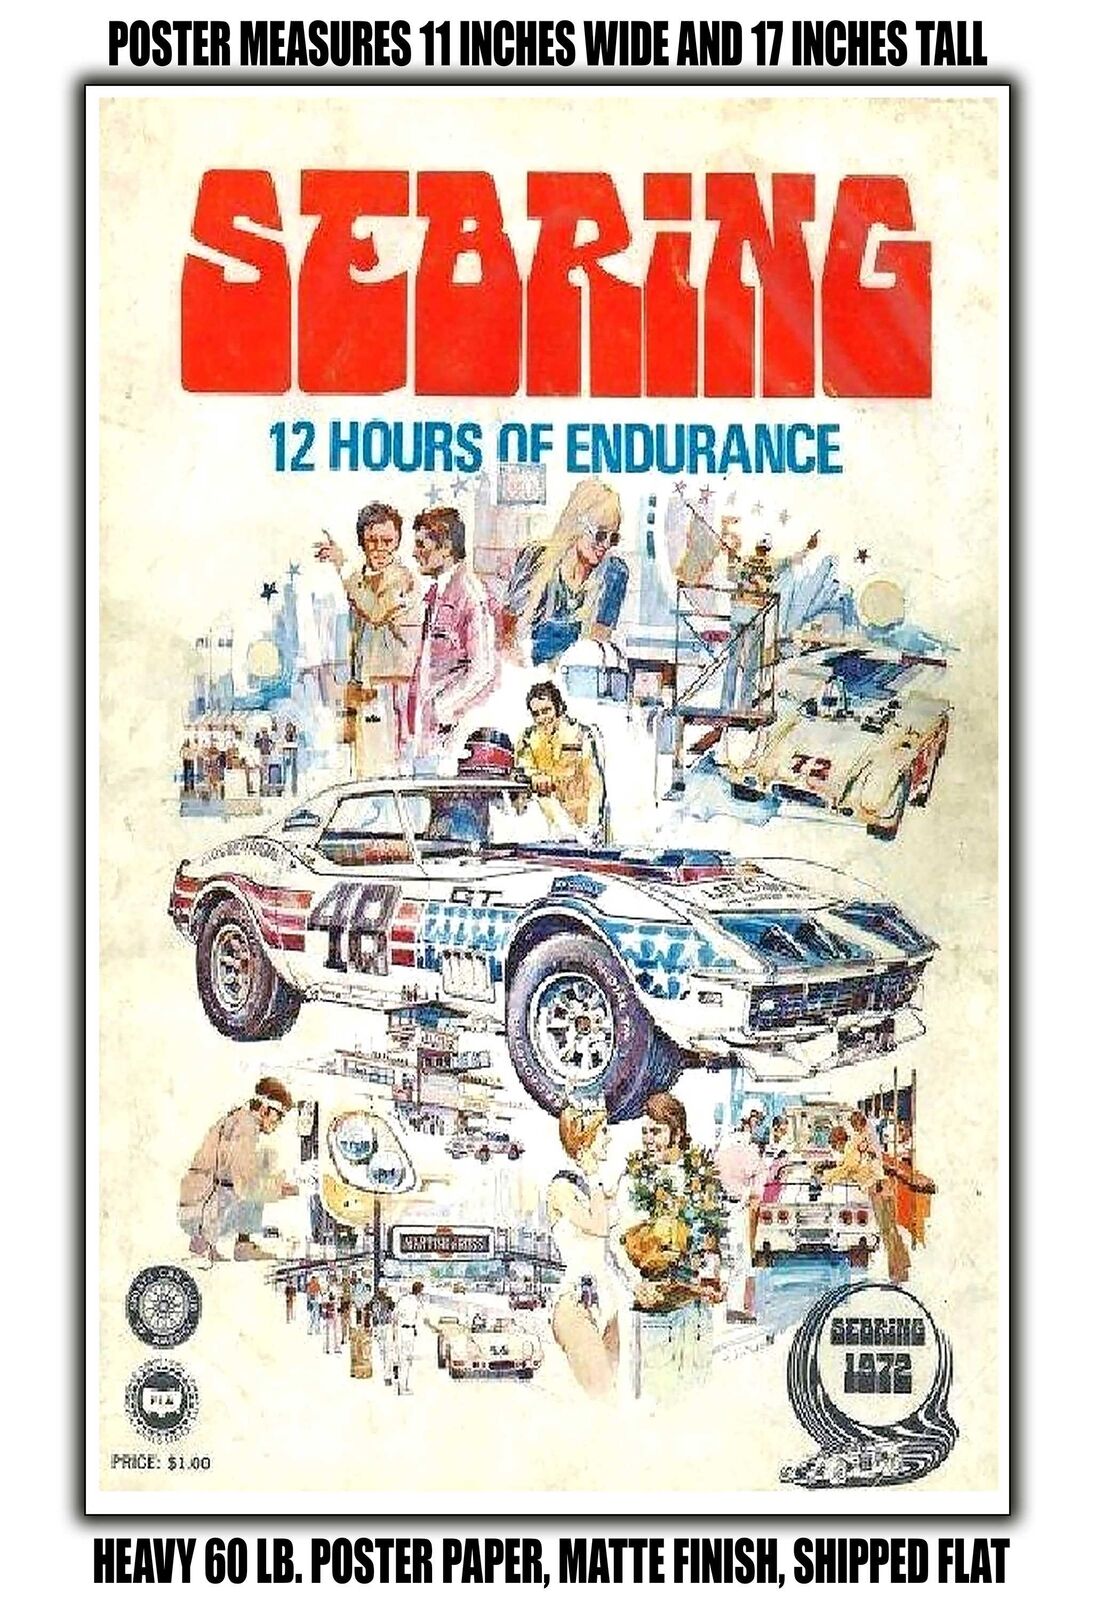 11x17 POSTER - 1972 Sebring 12 Hours of Endurance